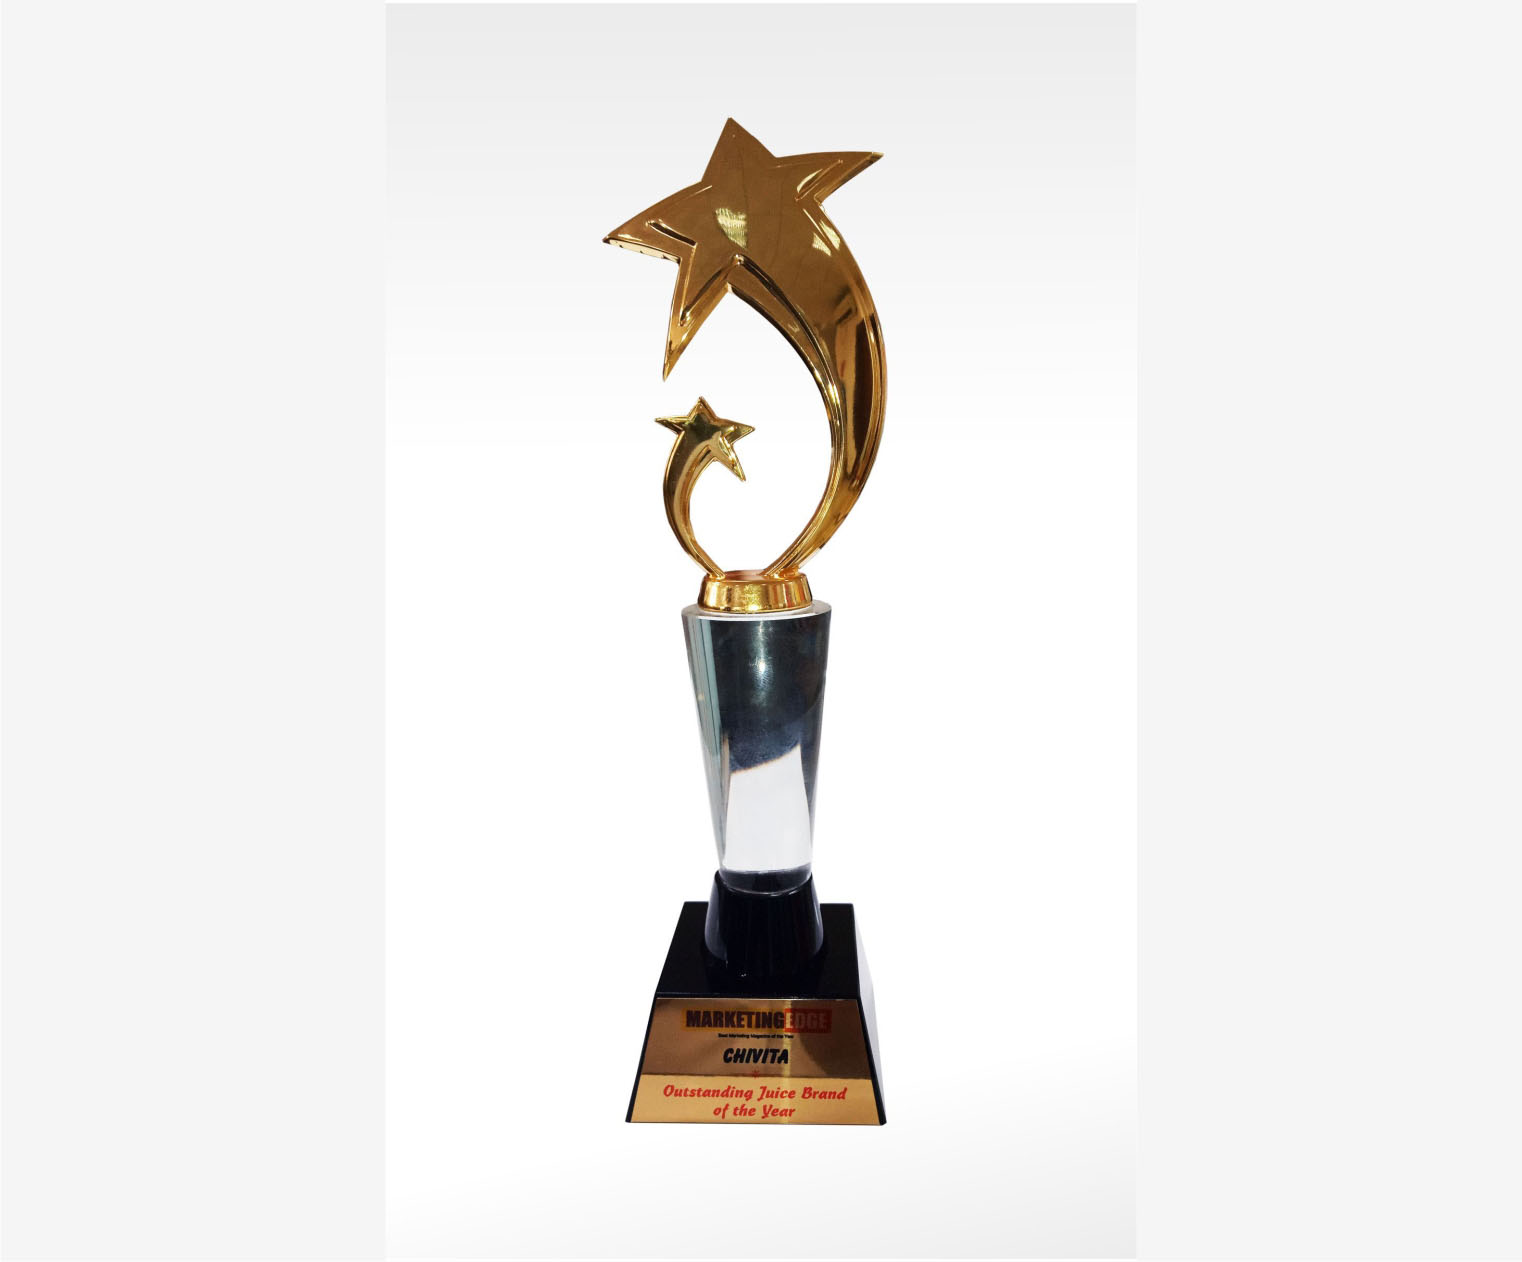 Chivita Wins Marketing Edge Outstanding Juice Brand Of The Year Award-marketingspace.com.ng